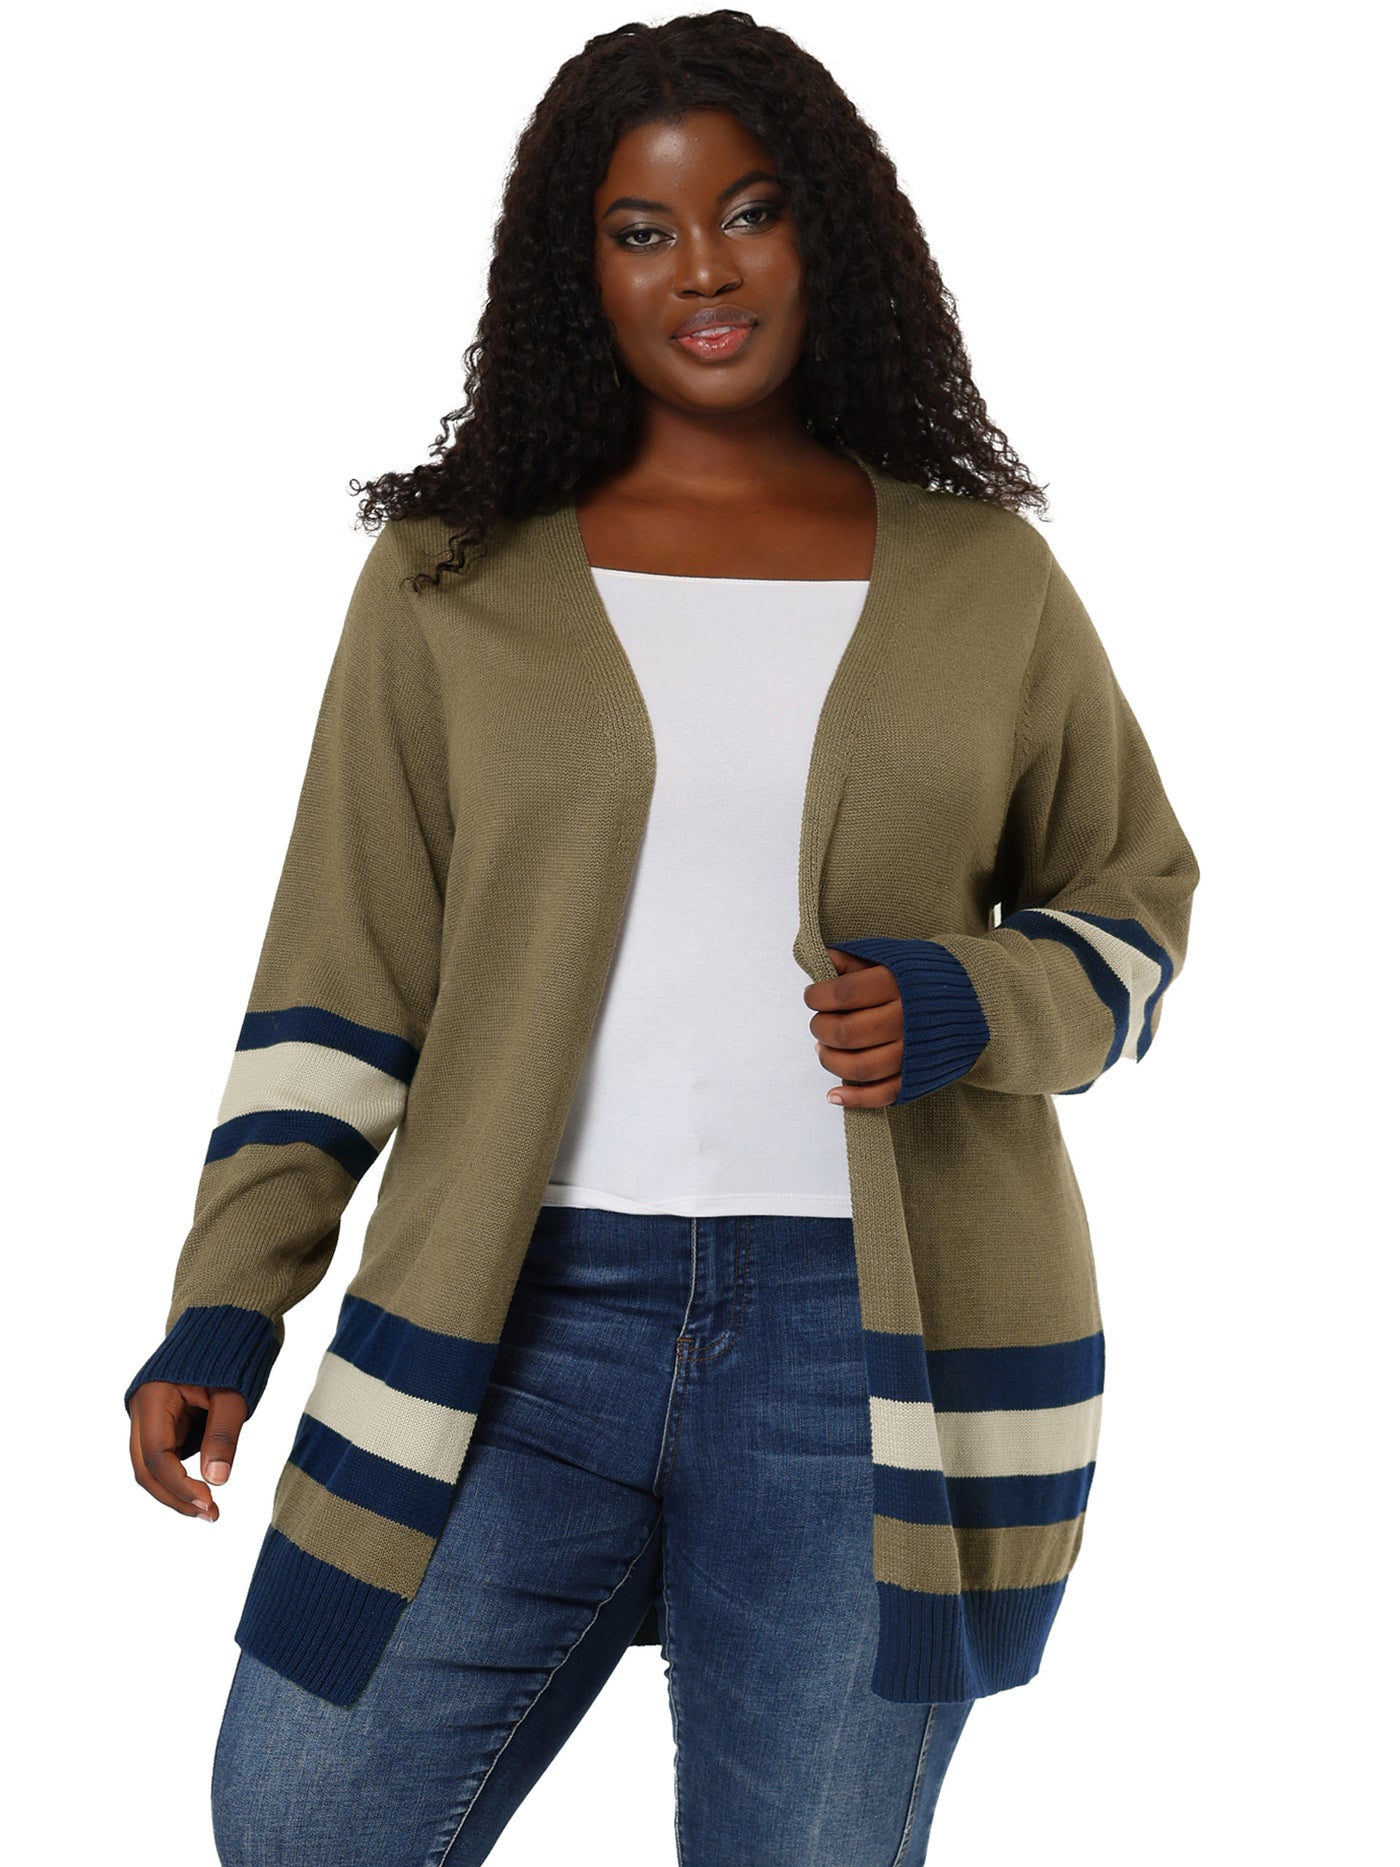 Bublédon Women's Plus Size Striped Open Front Sweater Cardigan